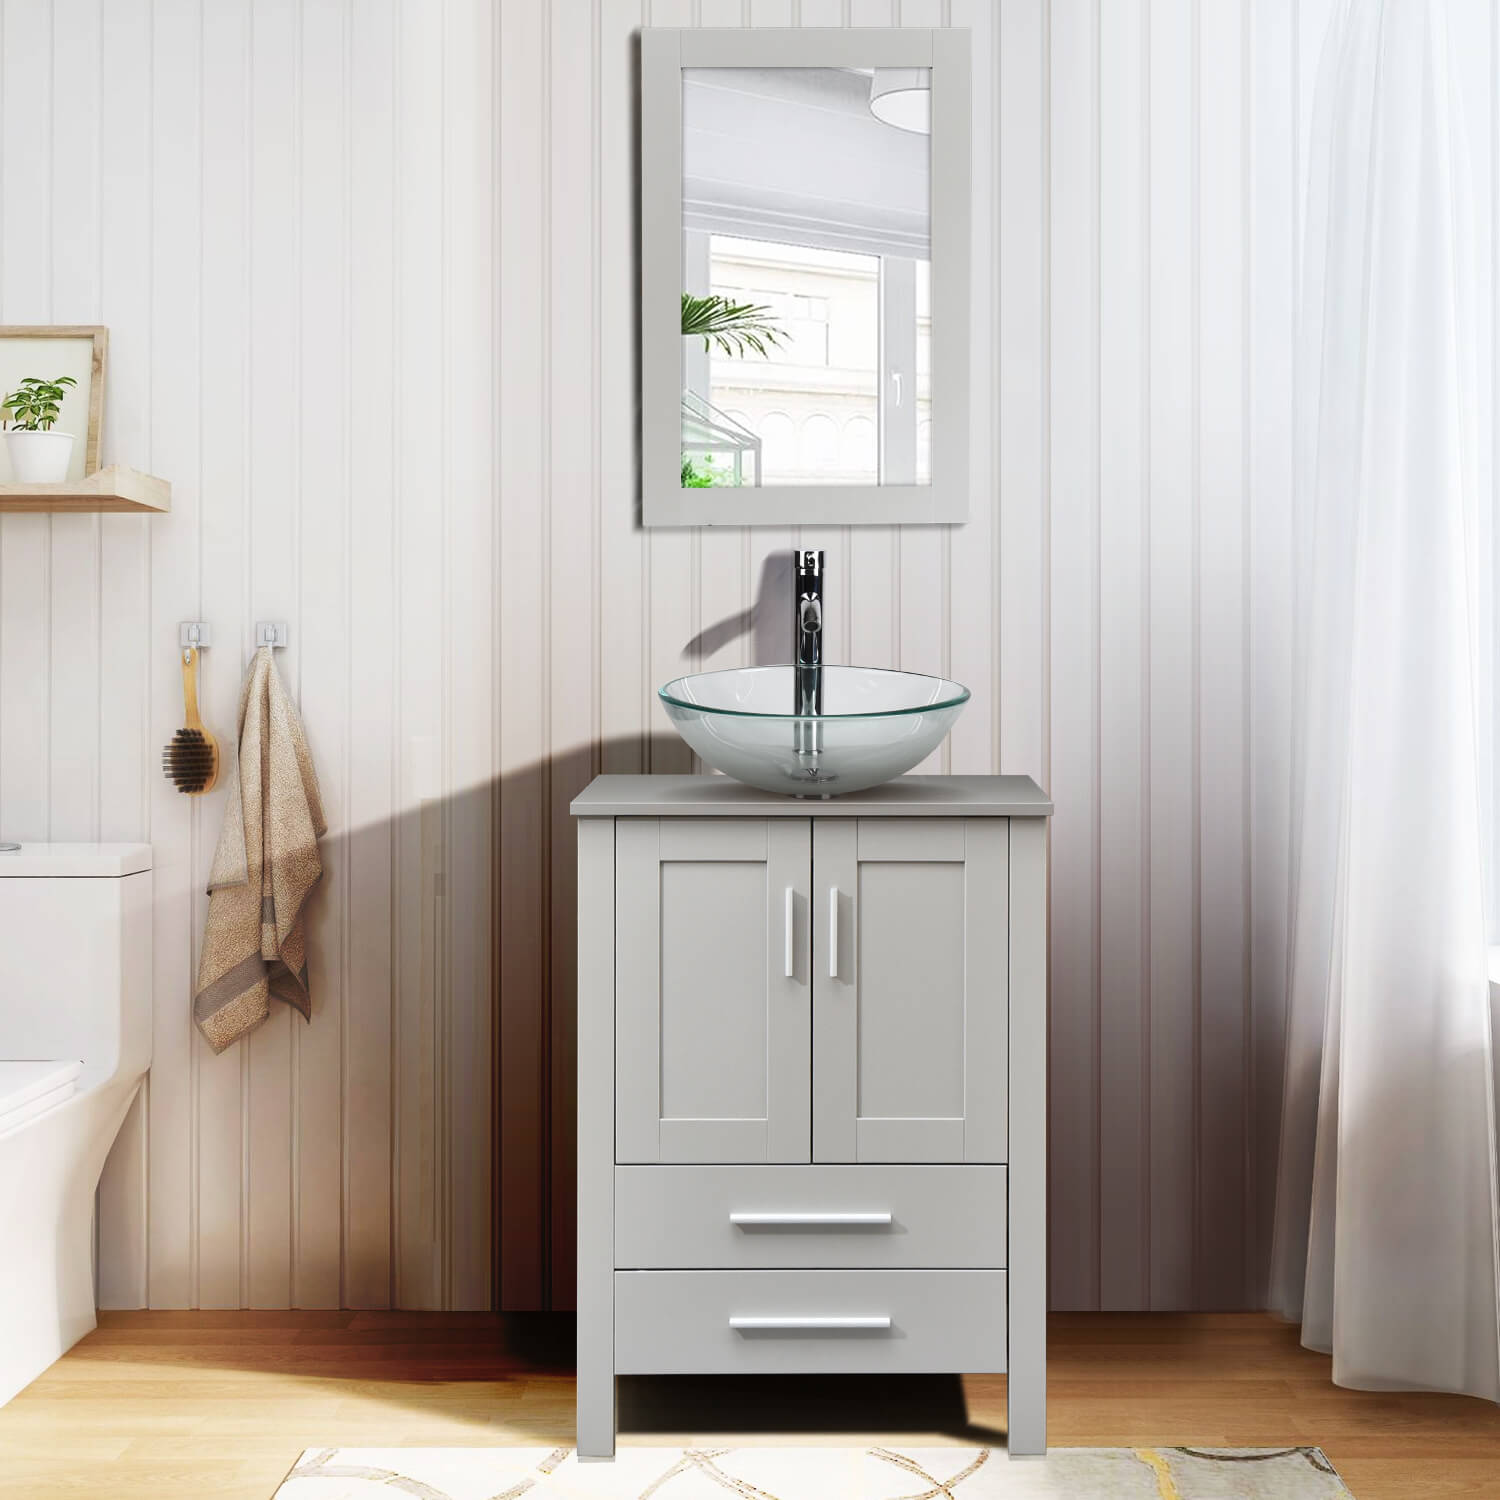 Elecwish gray wood bathroom vanity with round clear sink BA20061